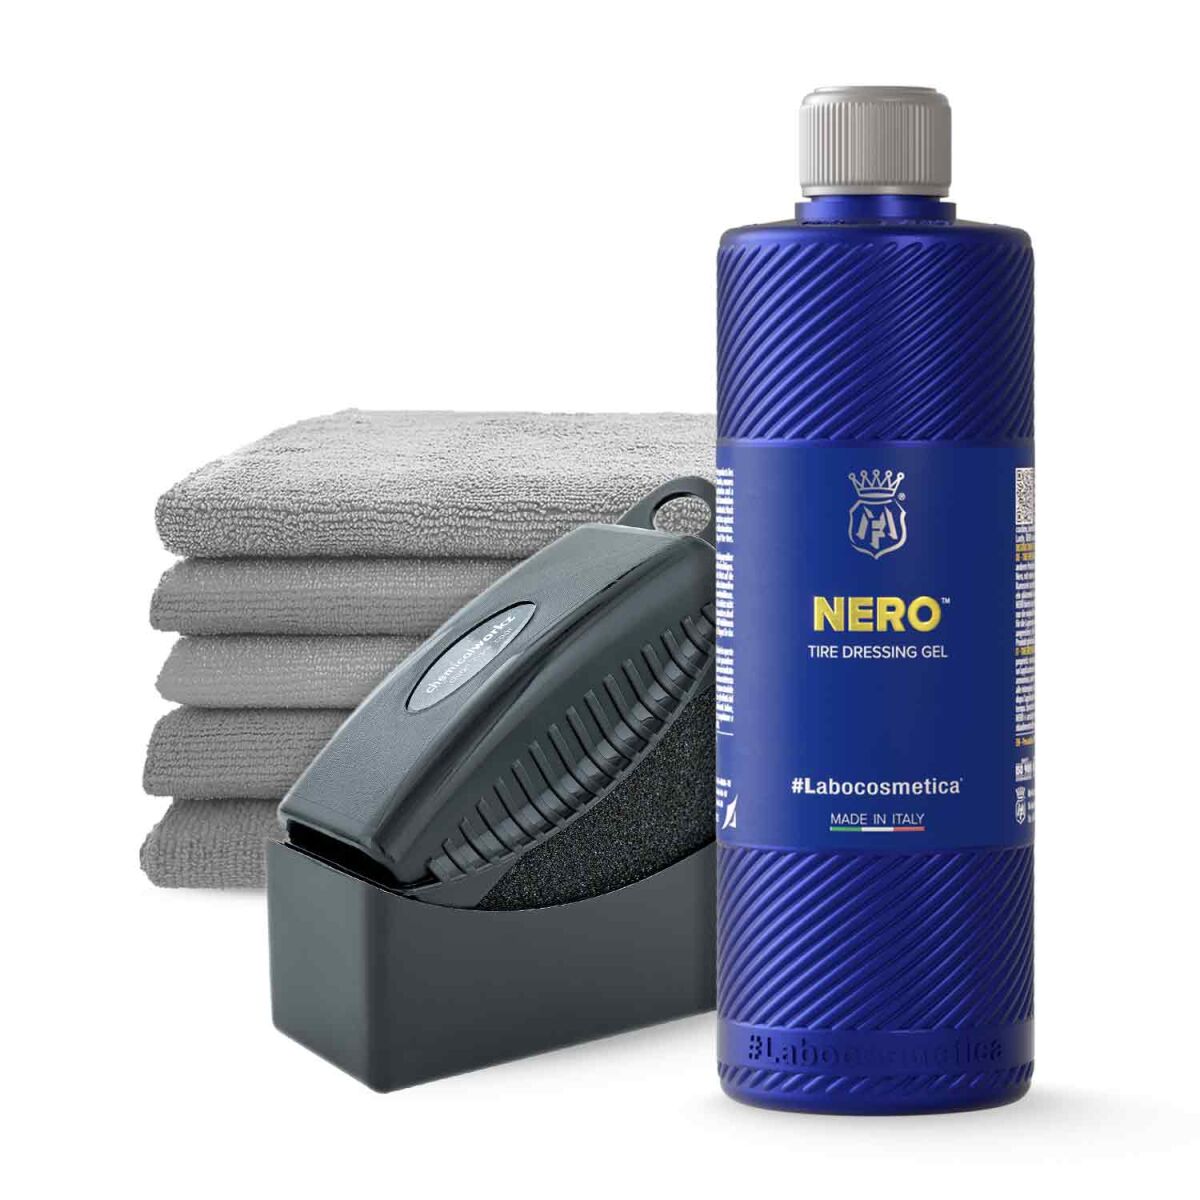 NERO - Tire dressing gel